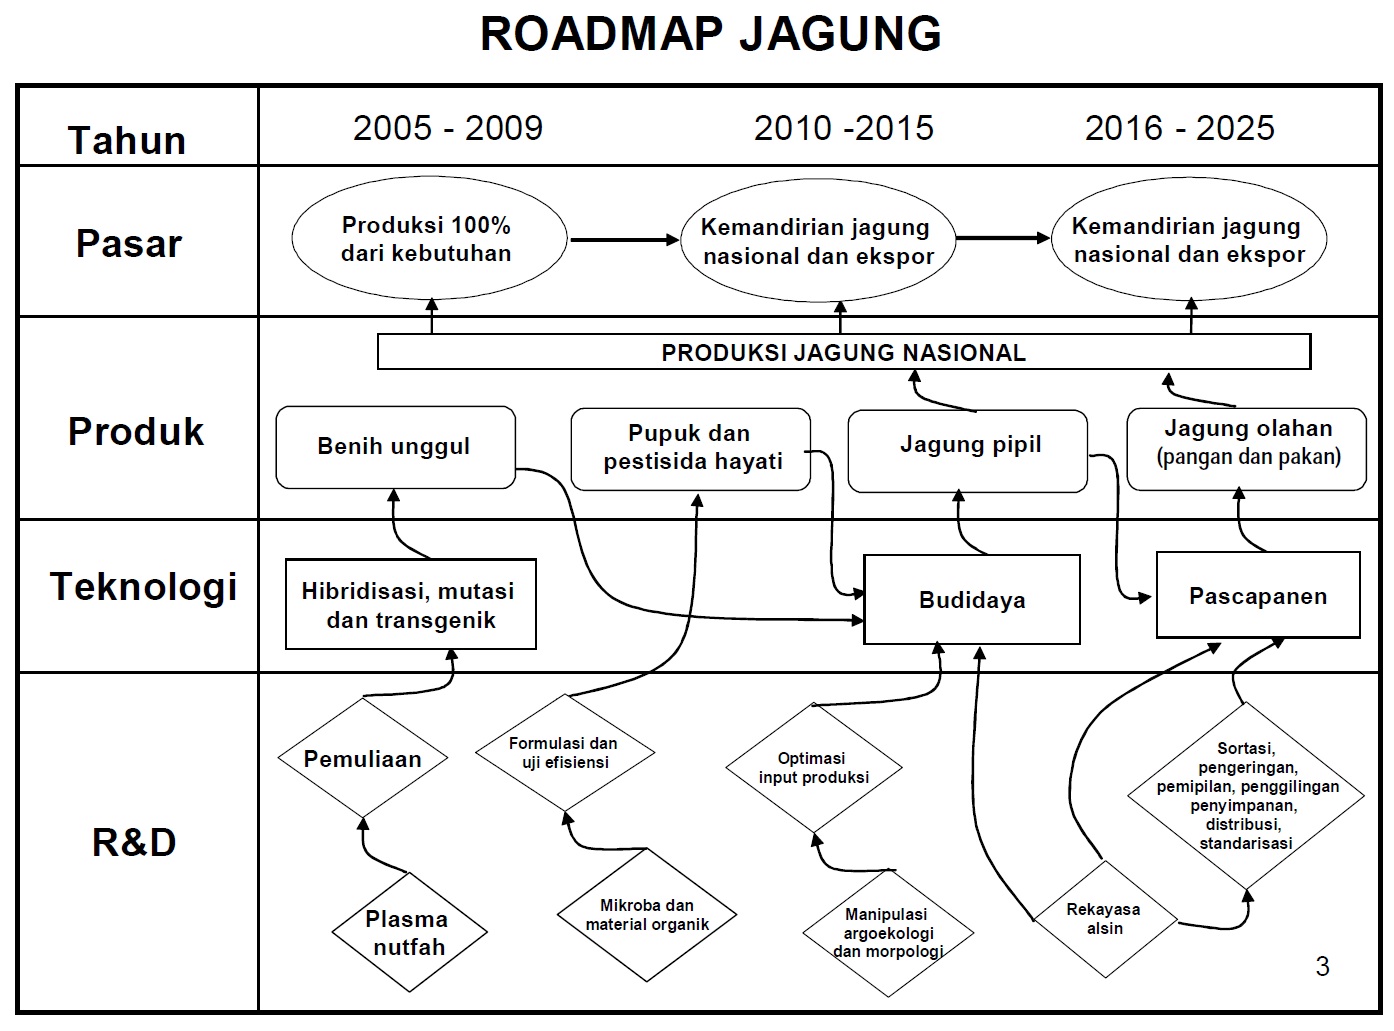 ❤ Contoh roadmap membandingakn 2 jurnal penelitian